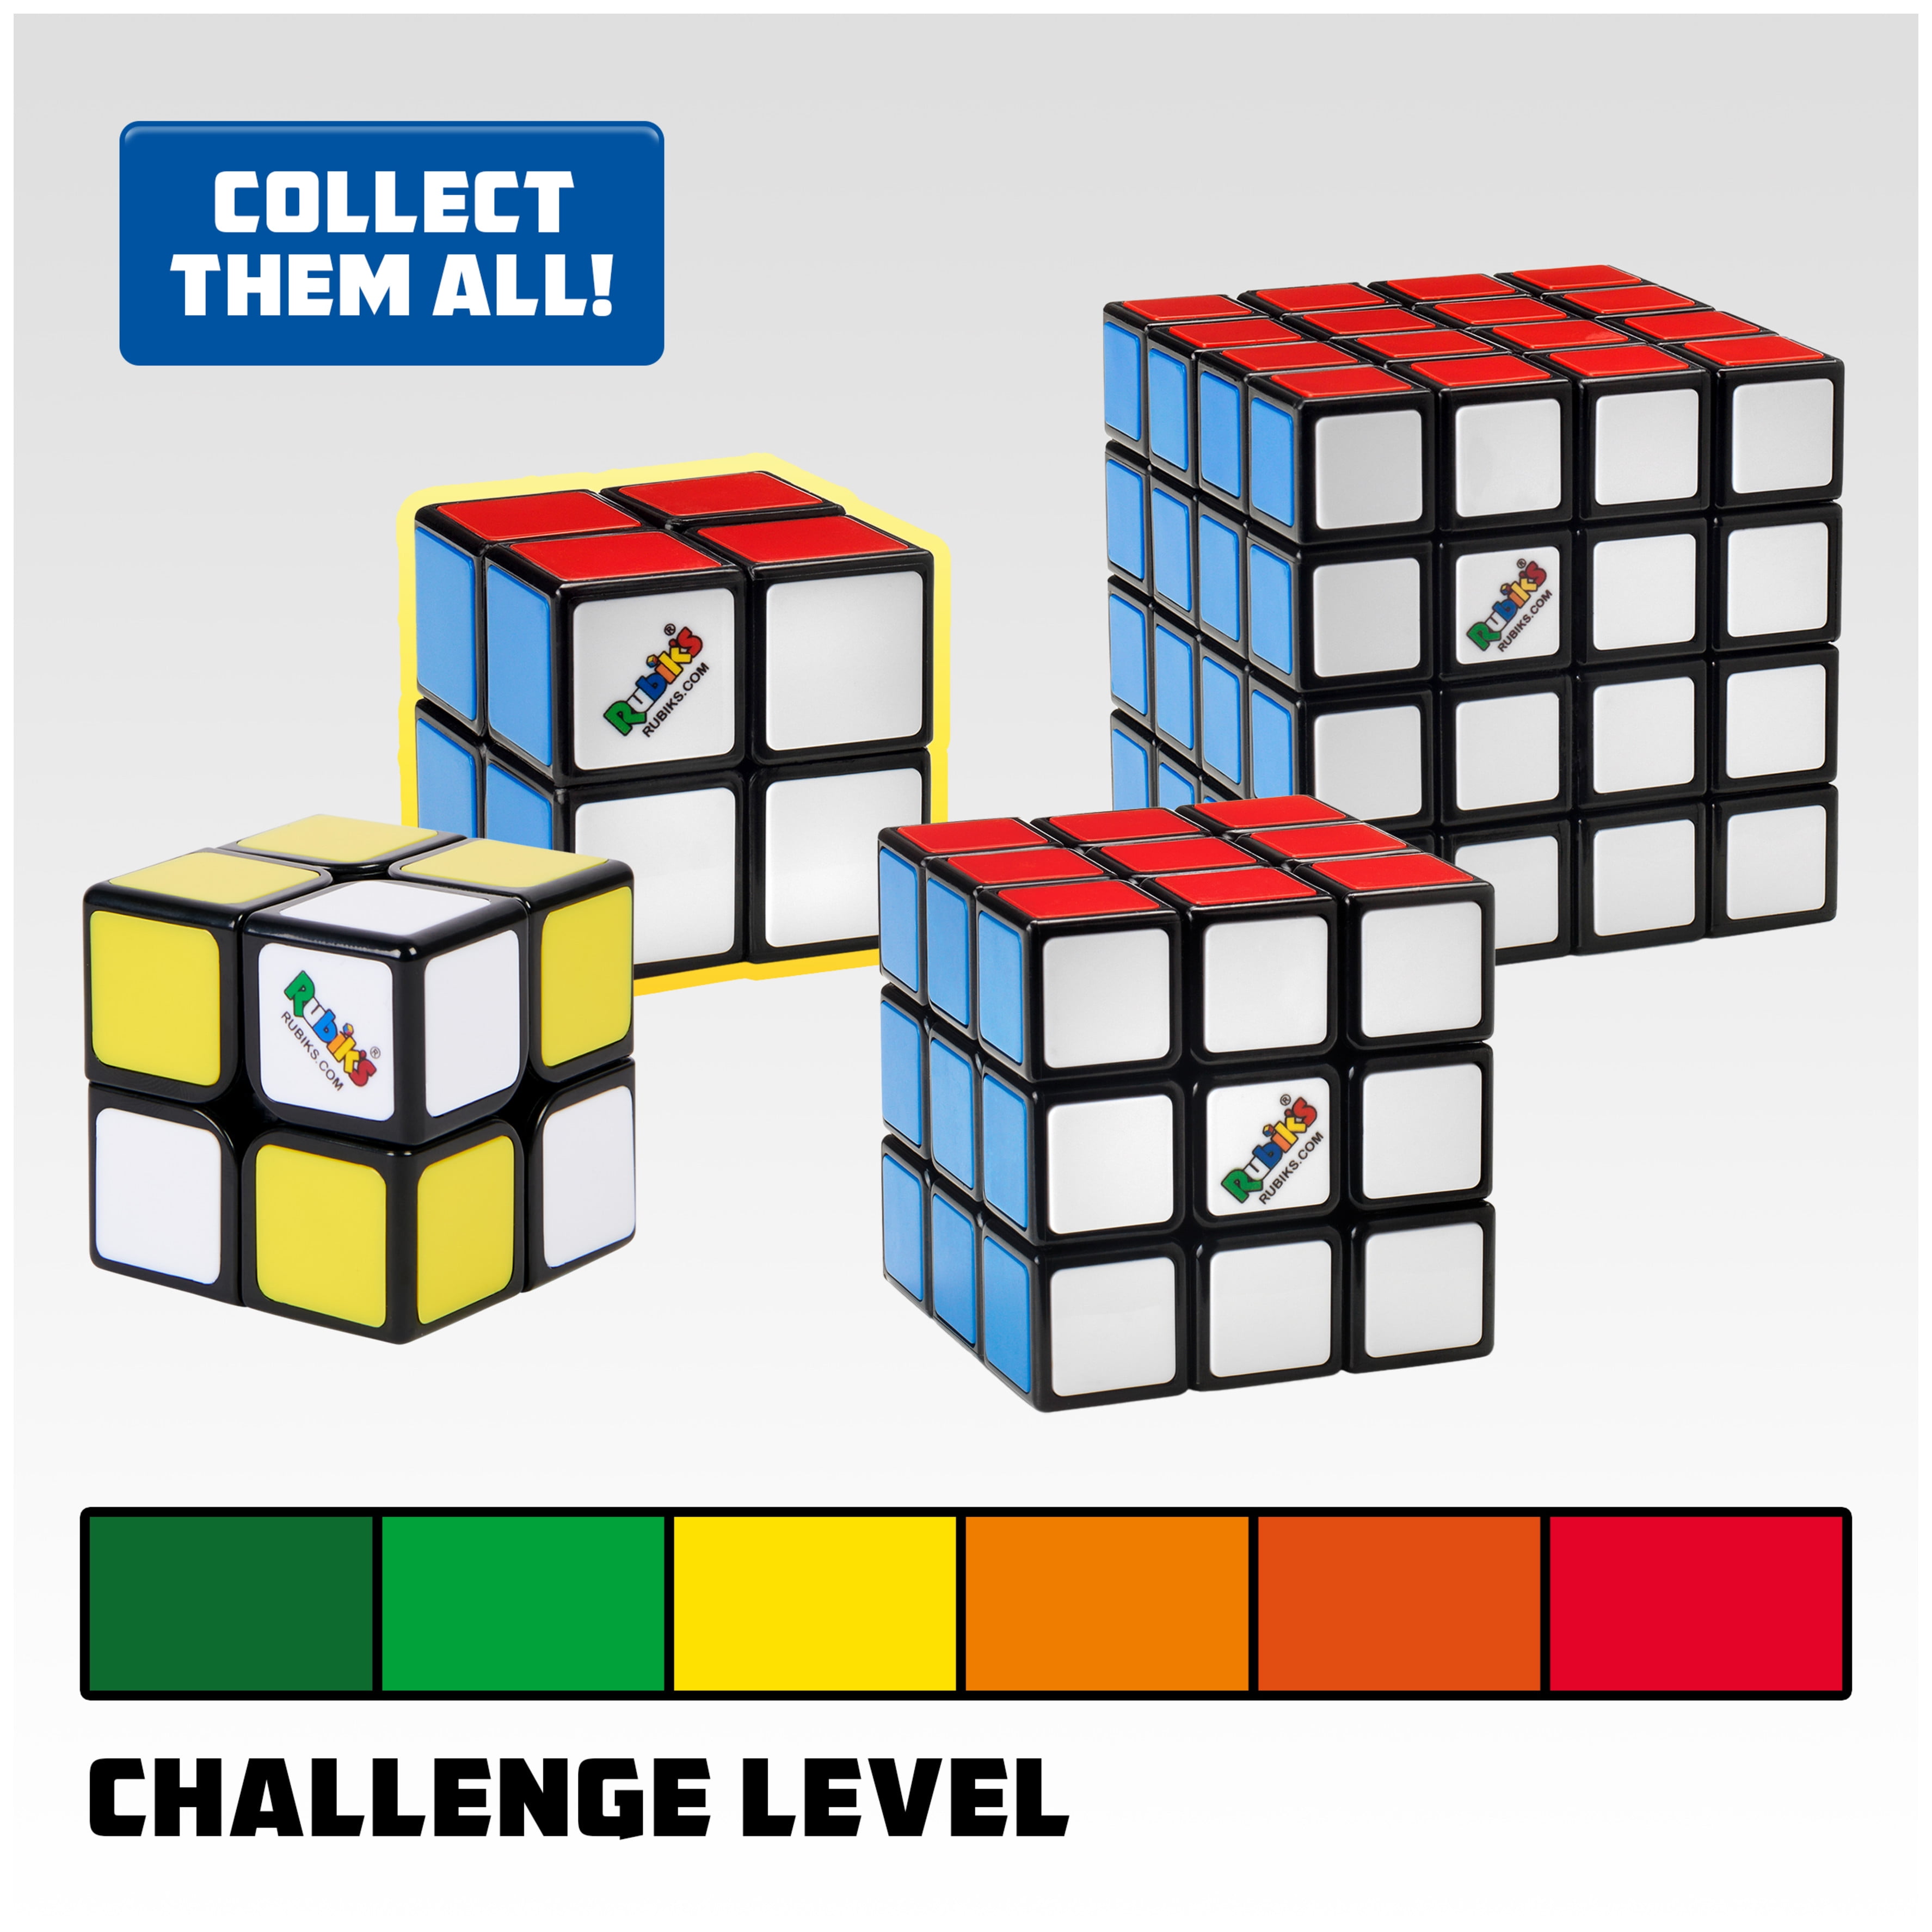 Rubik's Mini, Original 2x2 Rubik's Cube 3D Puzzle Fidget Cube 